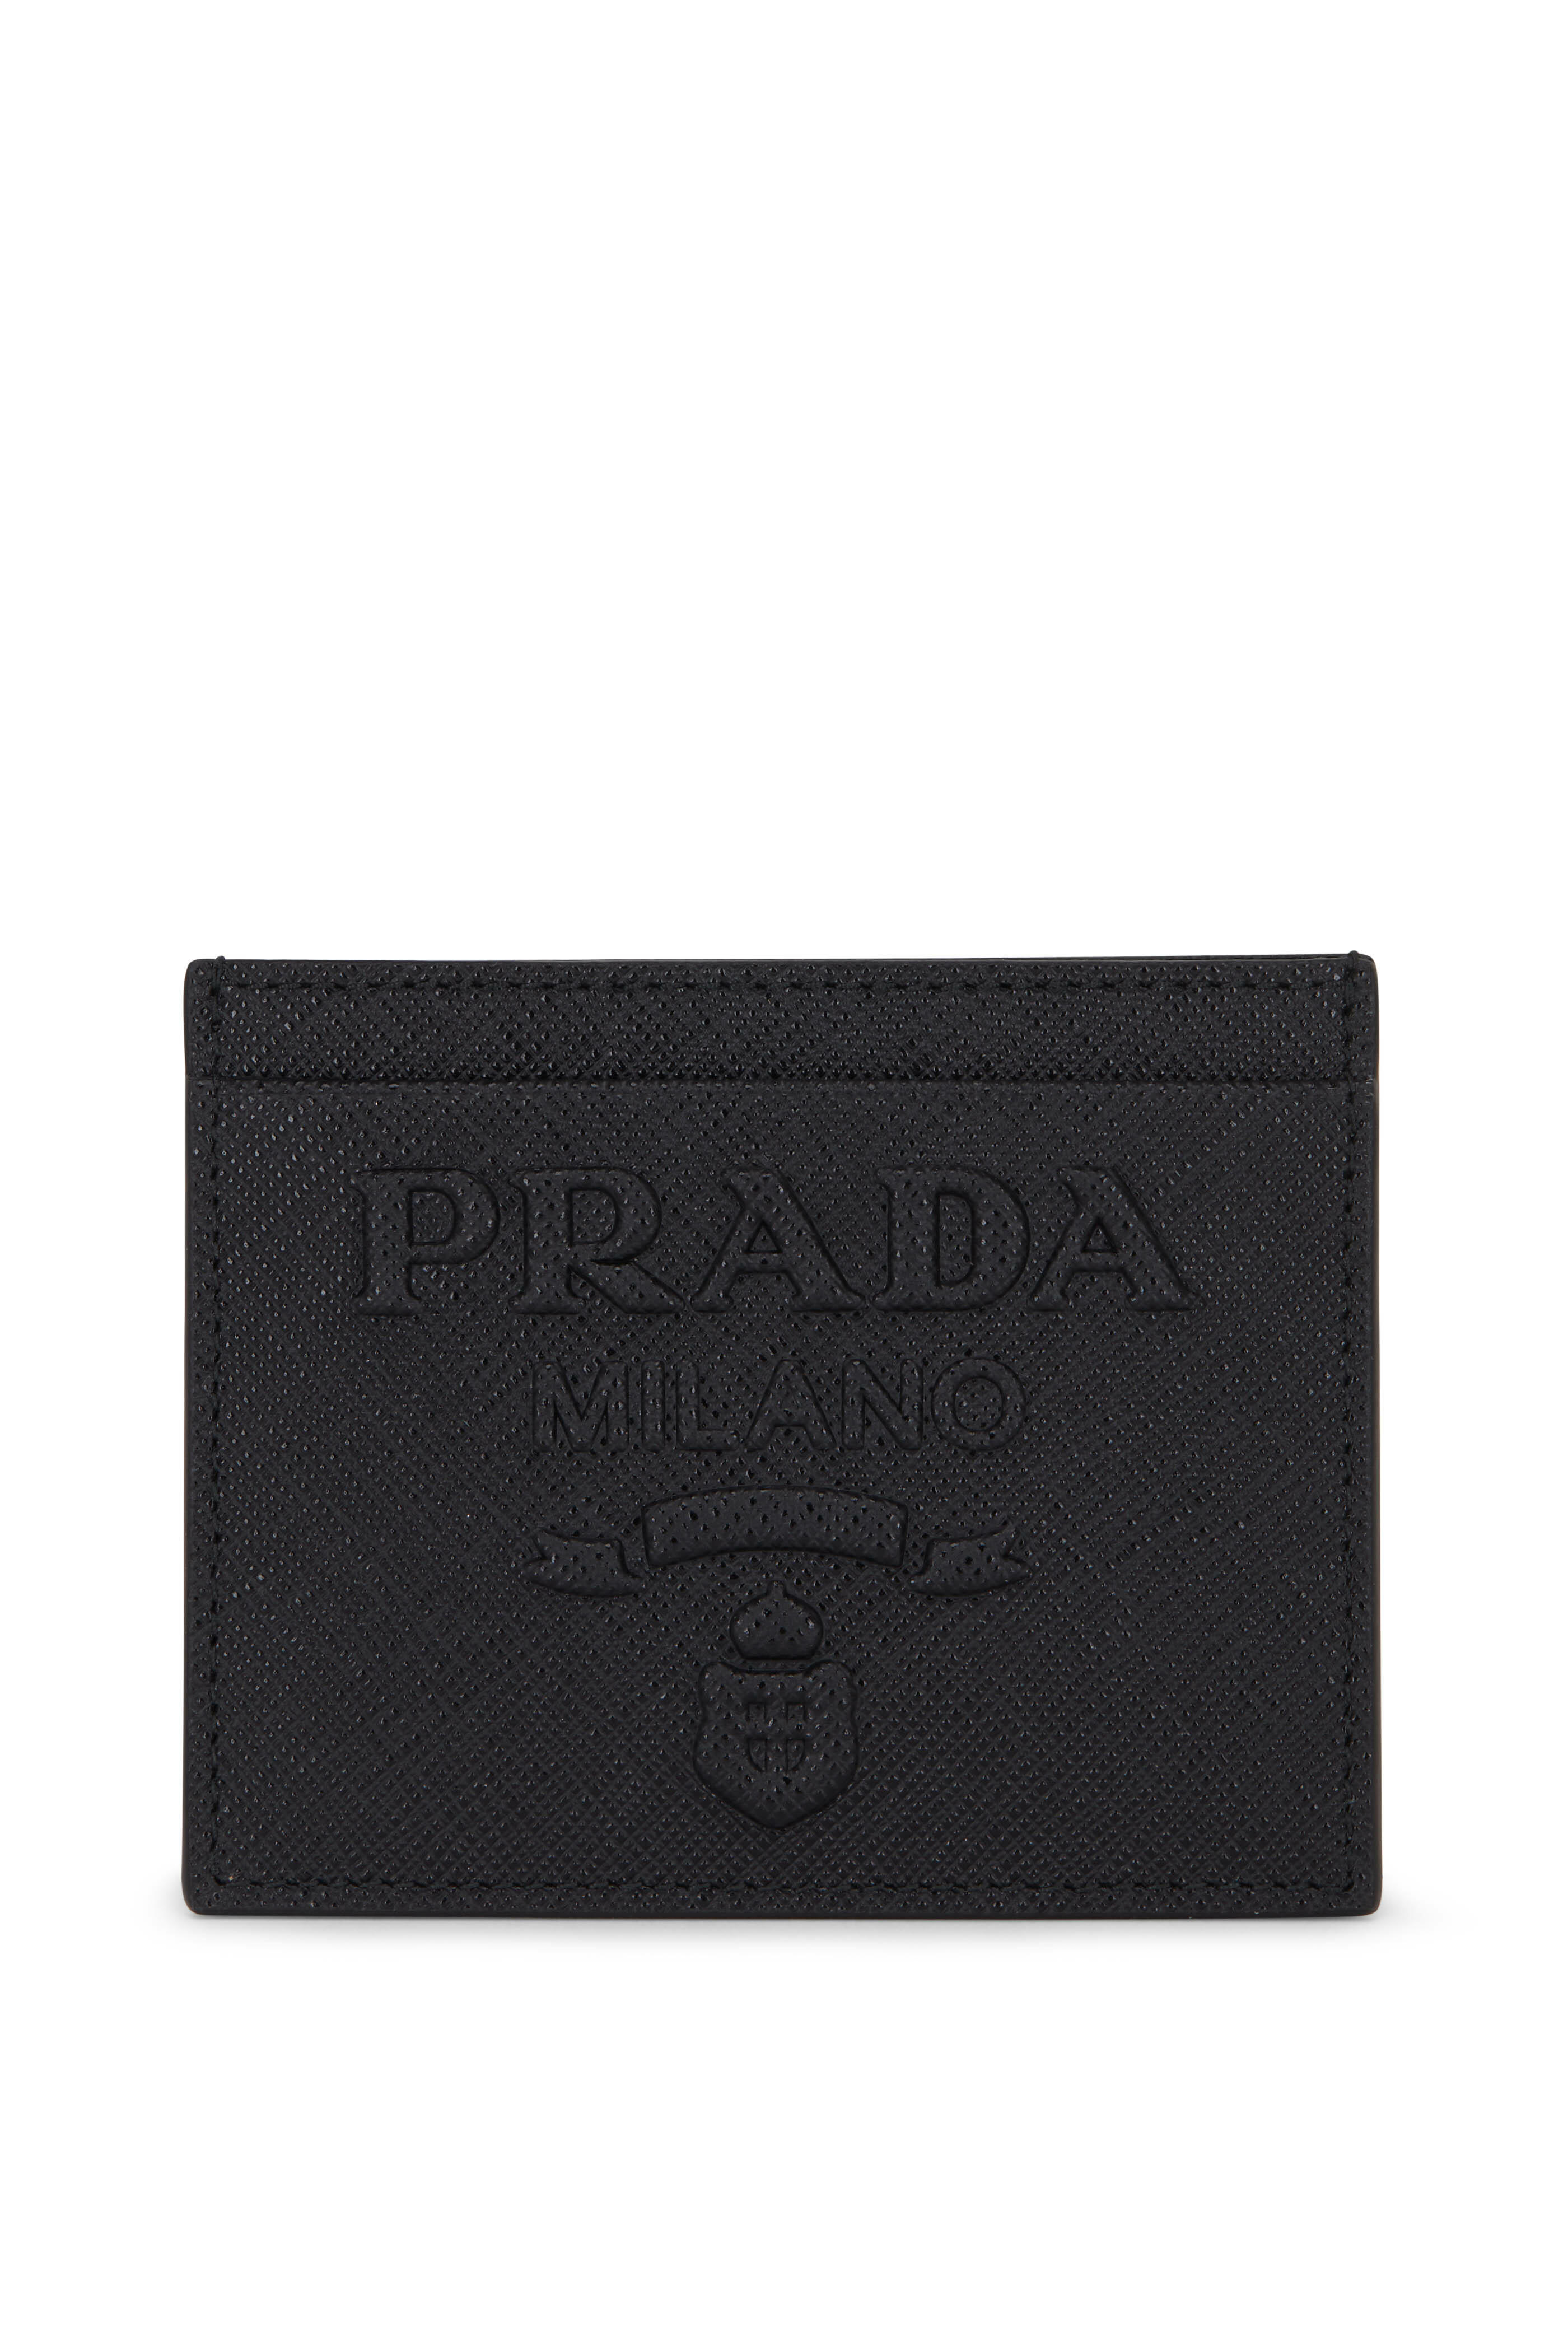 Prada Black Saffiano Leather Card Holder with Strap Prada